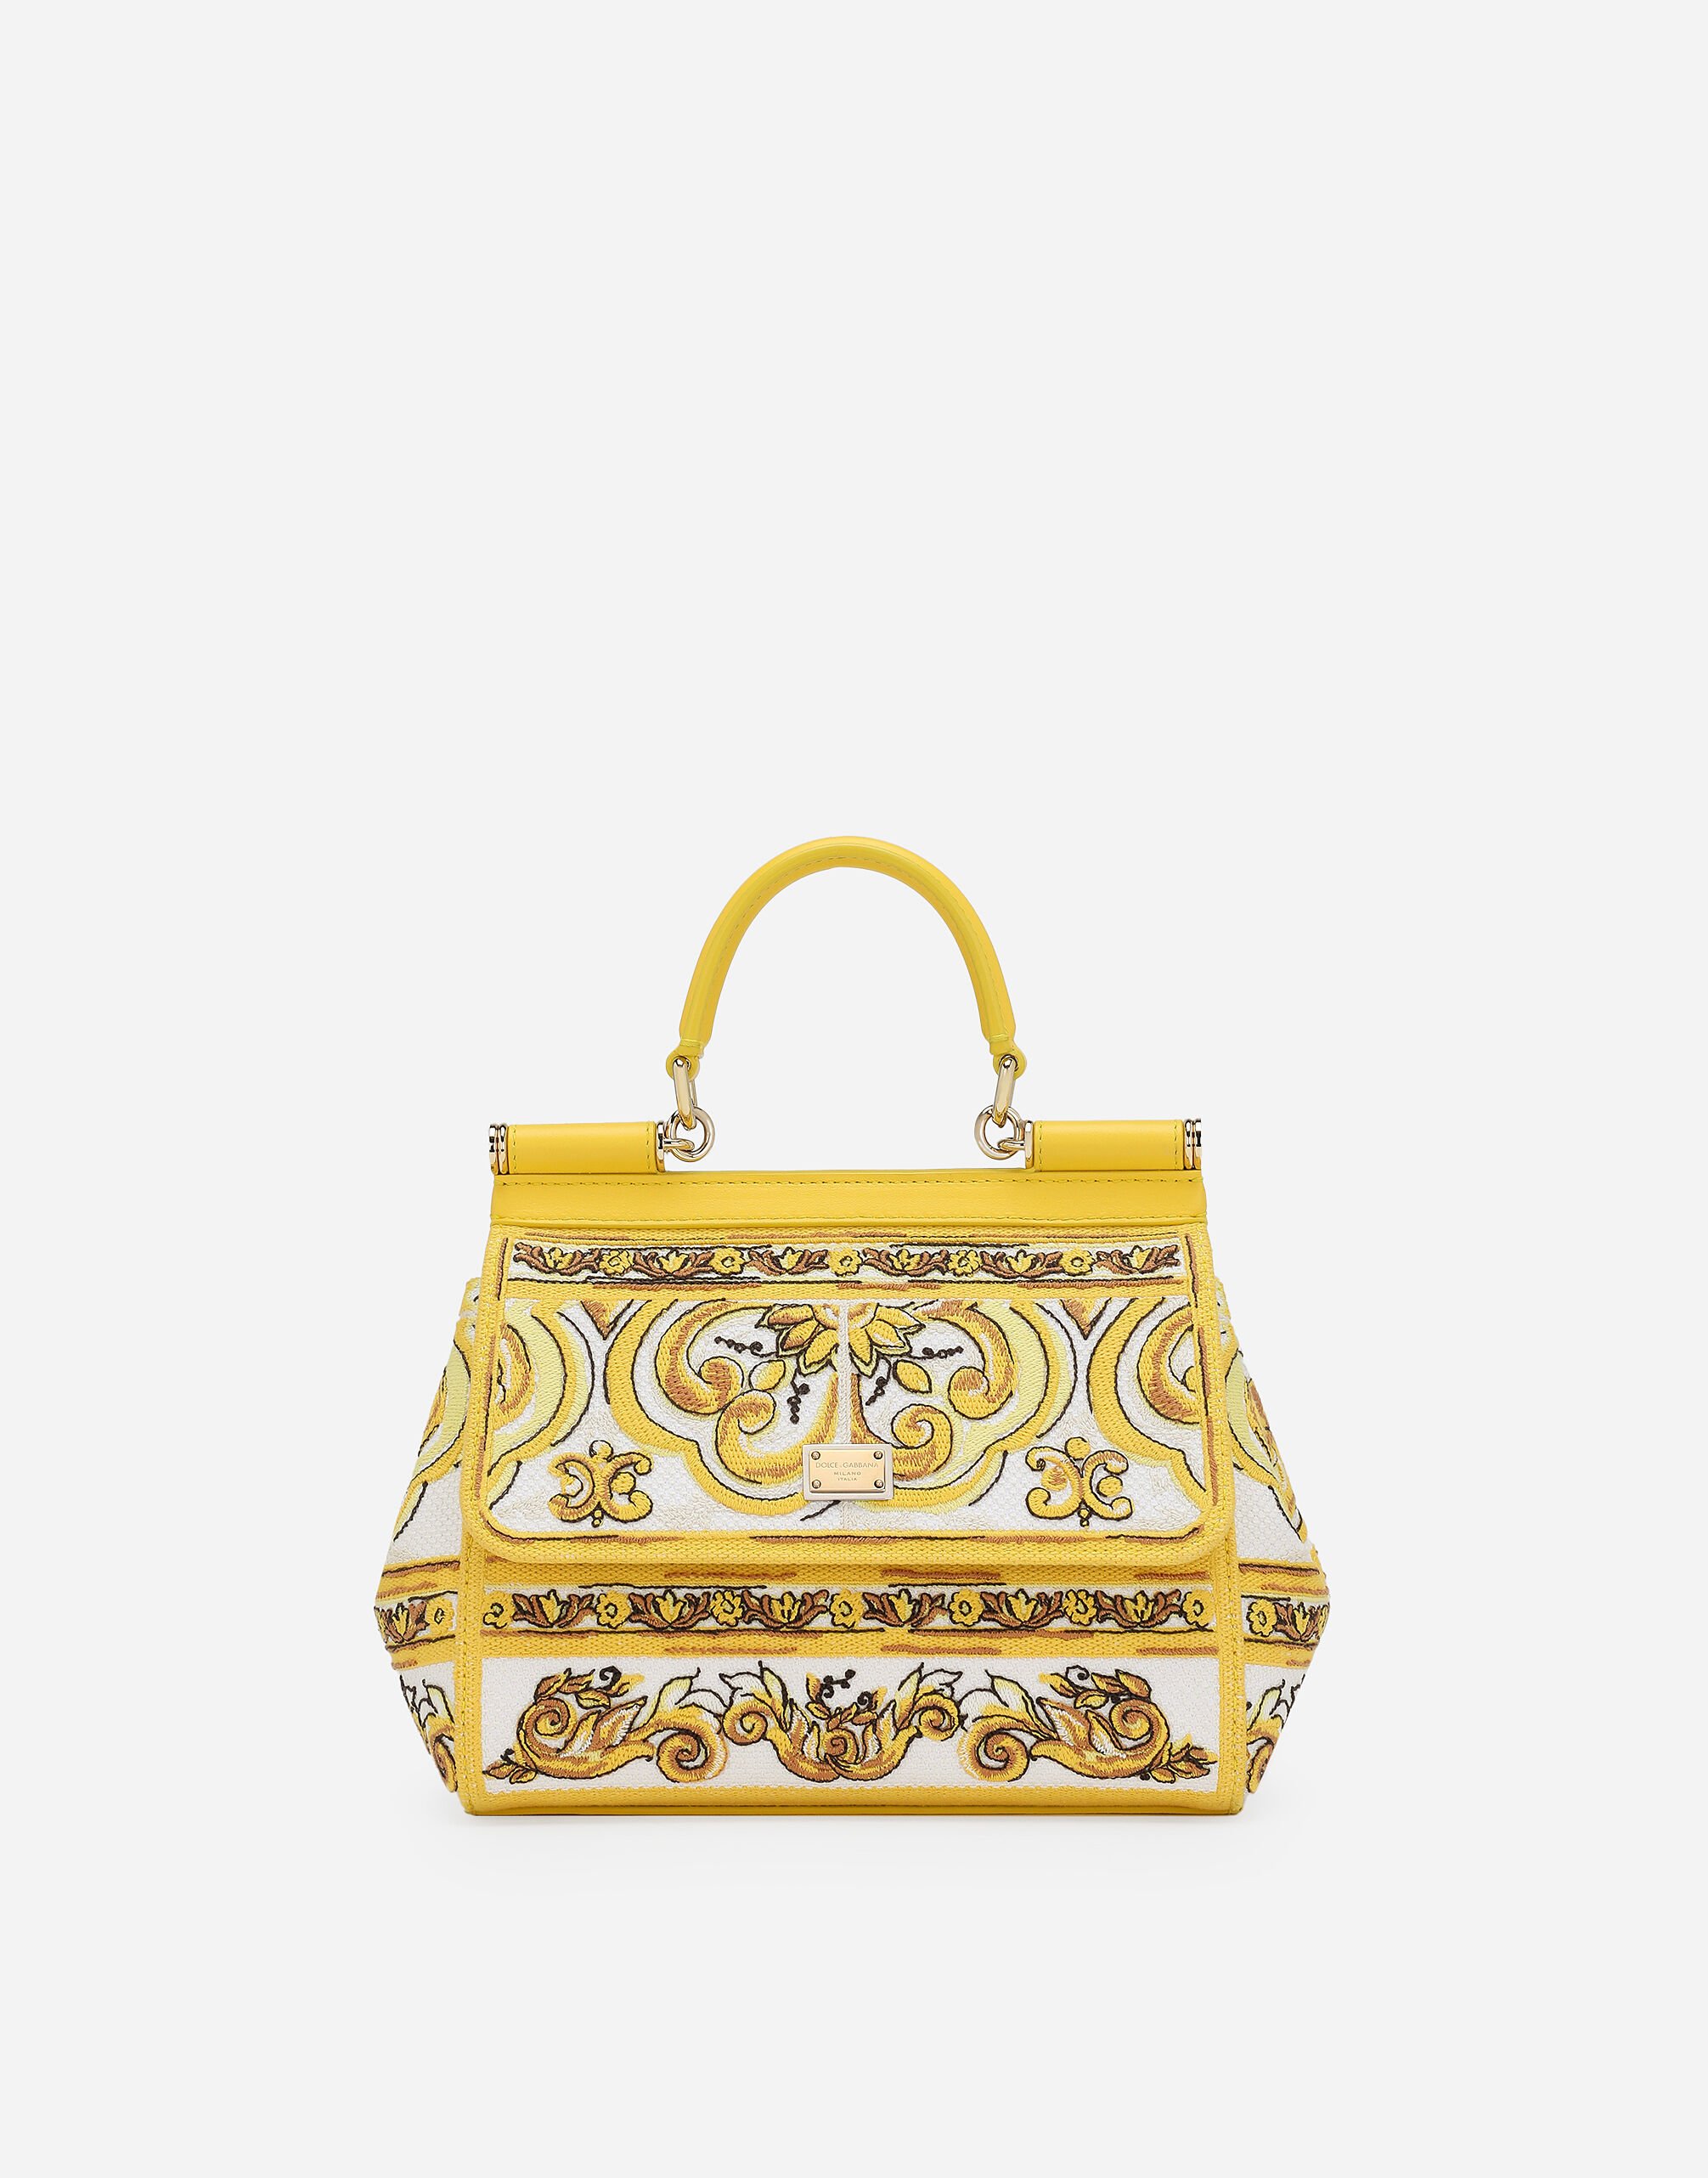 Dolce & Gabbana حقيبة يد متوسطة متعدد الألوان BB7655A4547